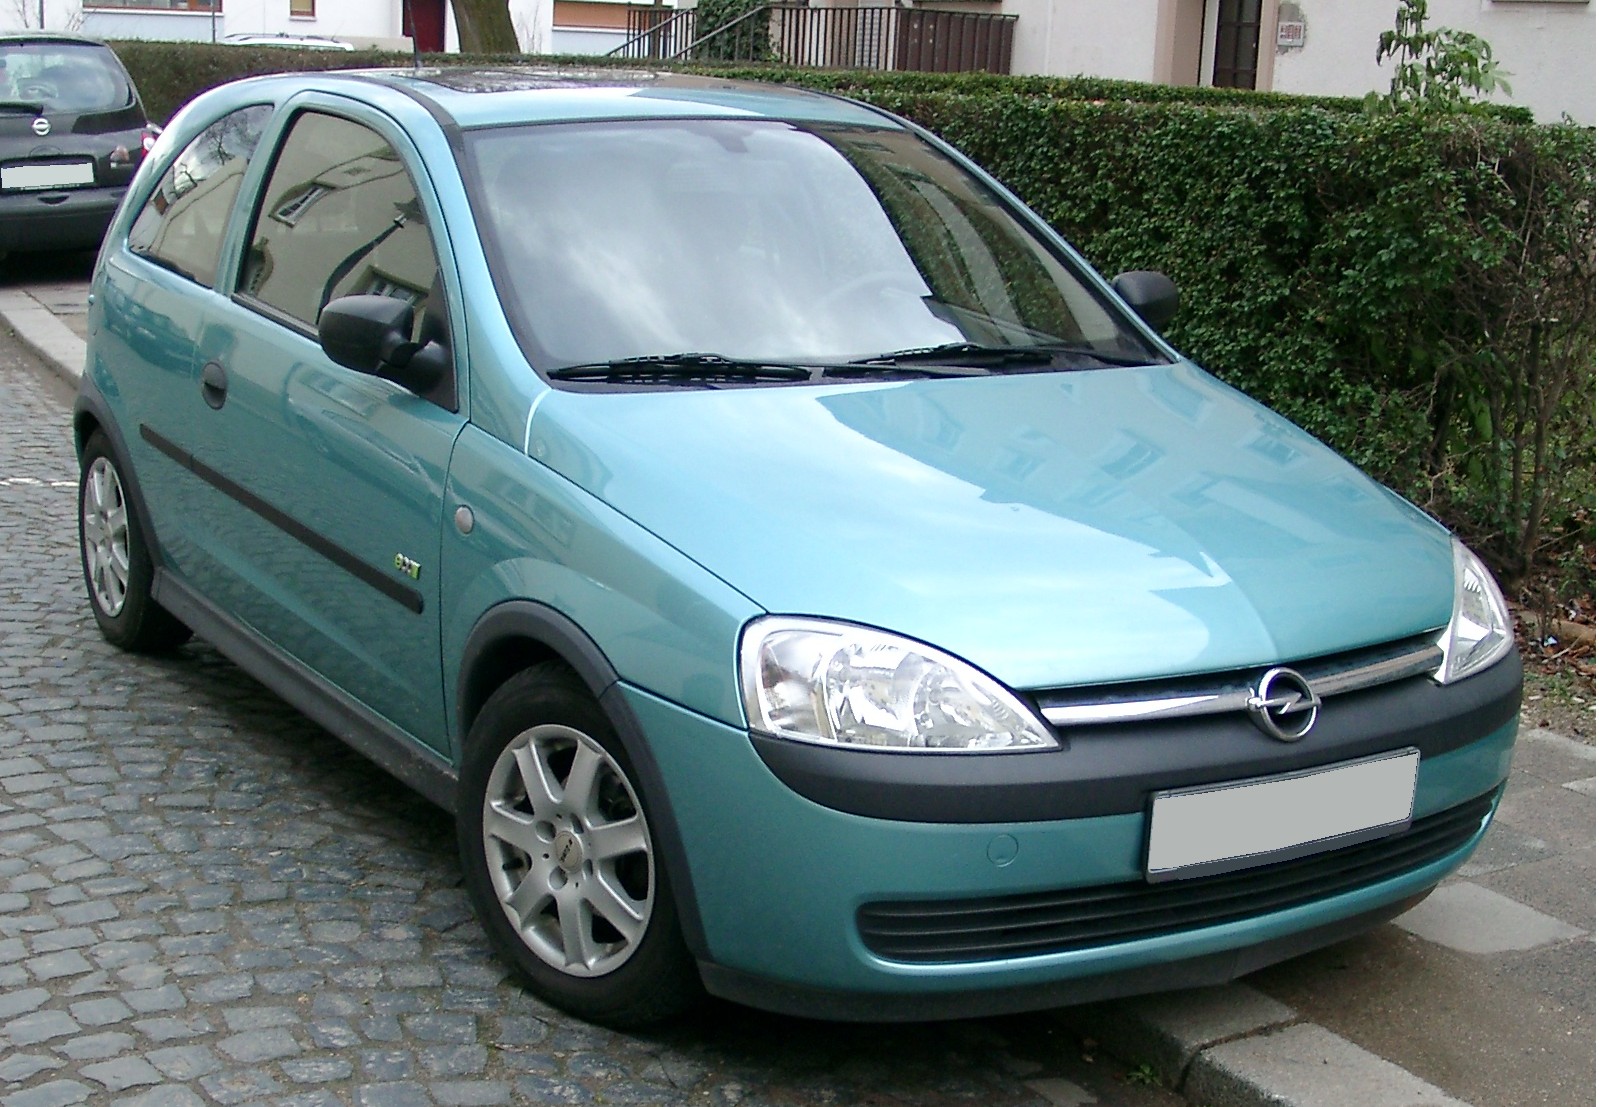 File:Opel Corsa C Dreitürer Heck.JPG - Wikimedia Commons